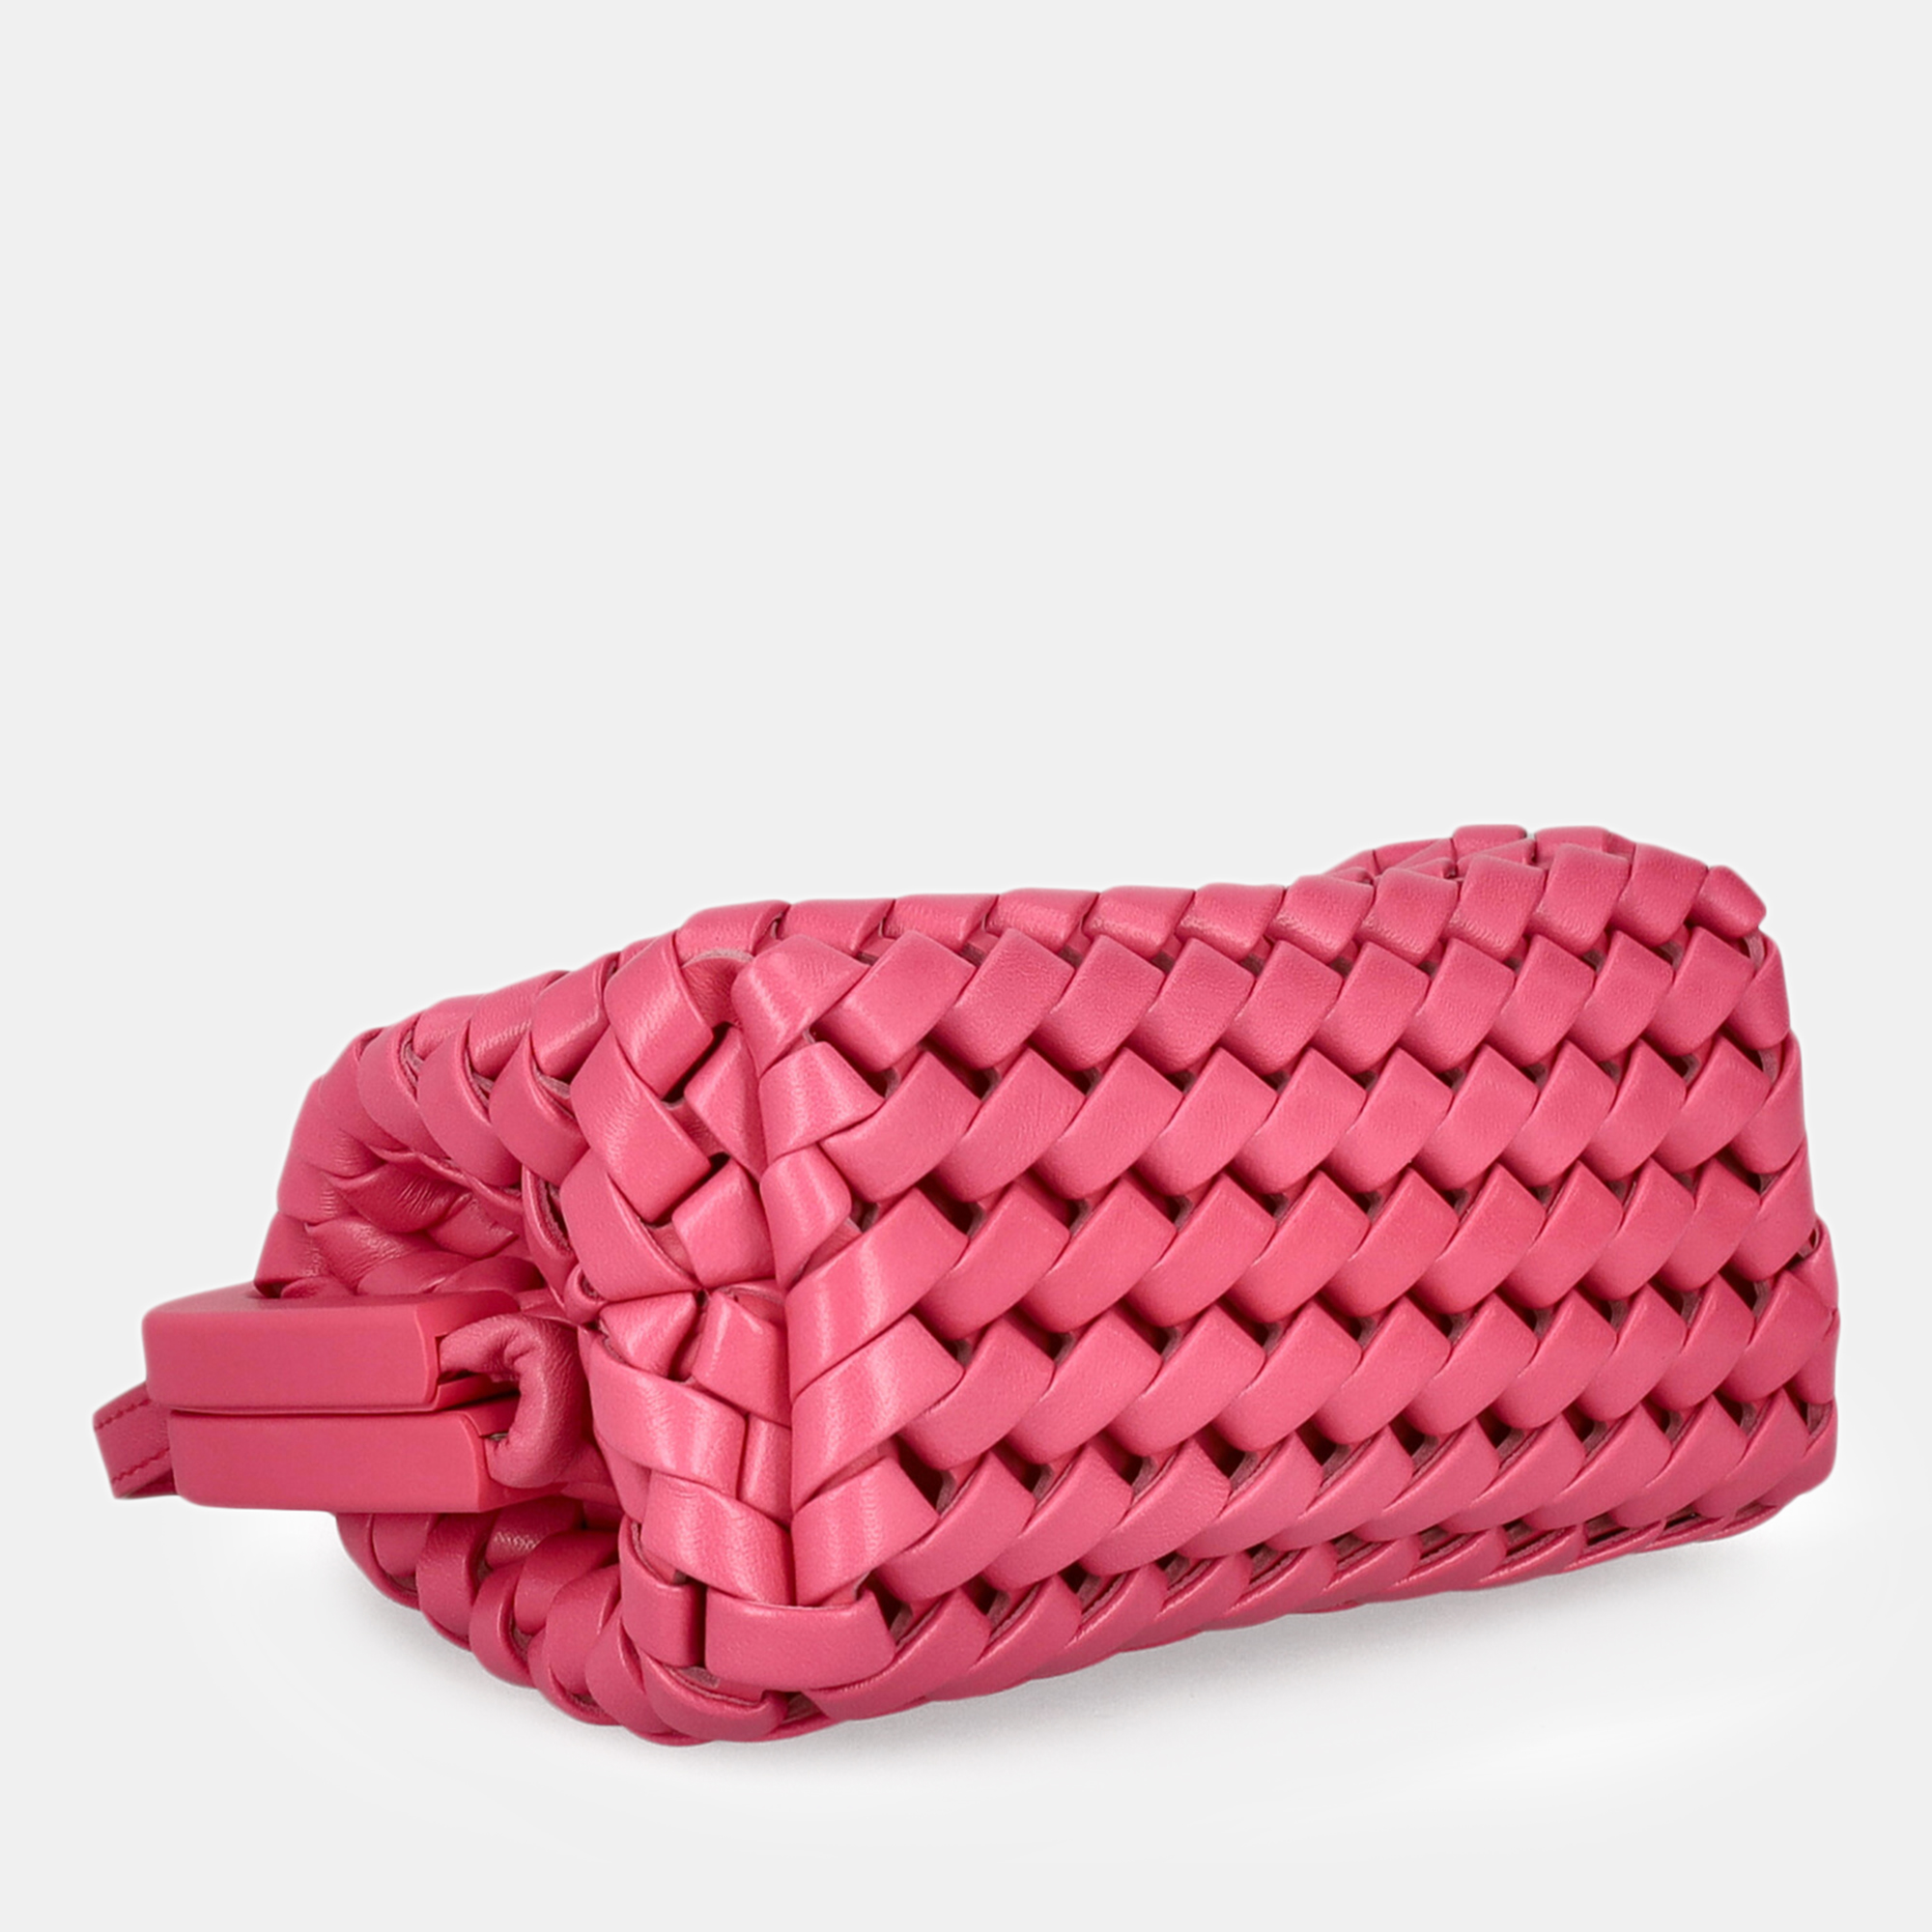 Bottega Veneta Point -  Women's Leather Cross Body Bag - Pink - One Size